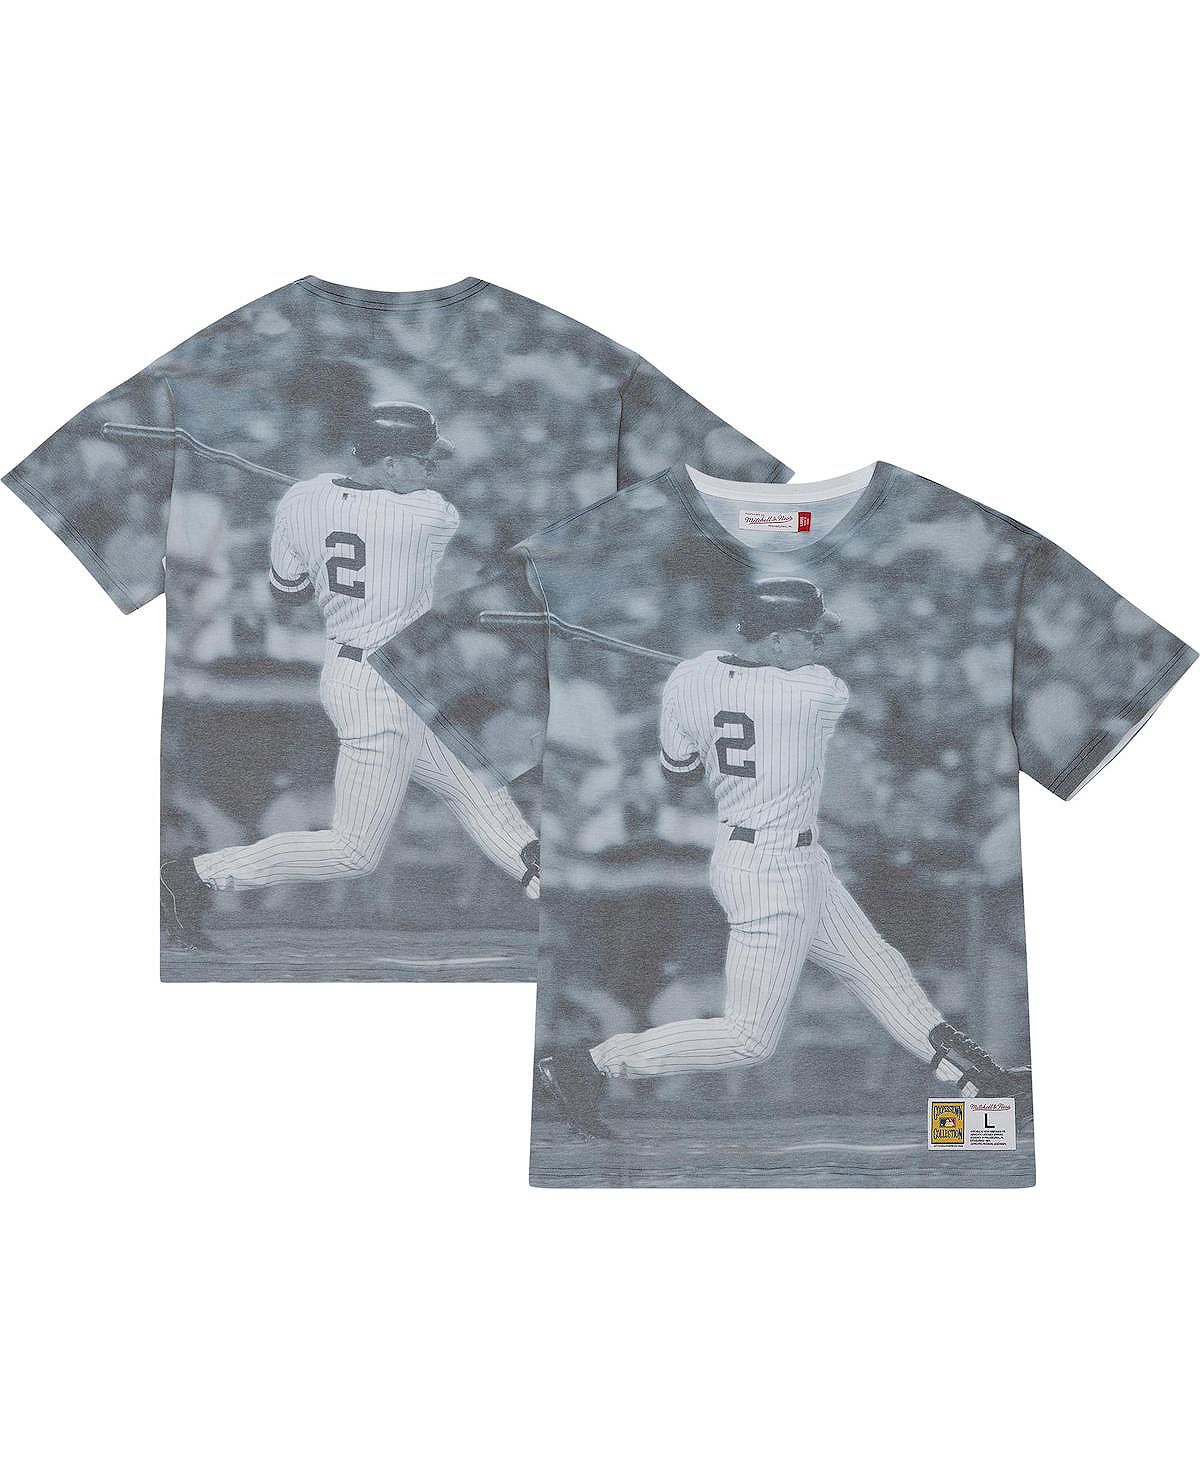 цена Мужская футболка Derek Jeter New York Yankees Cooperstown Collection с сублимированным рисунком игрока Mitchell & Ness